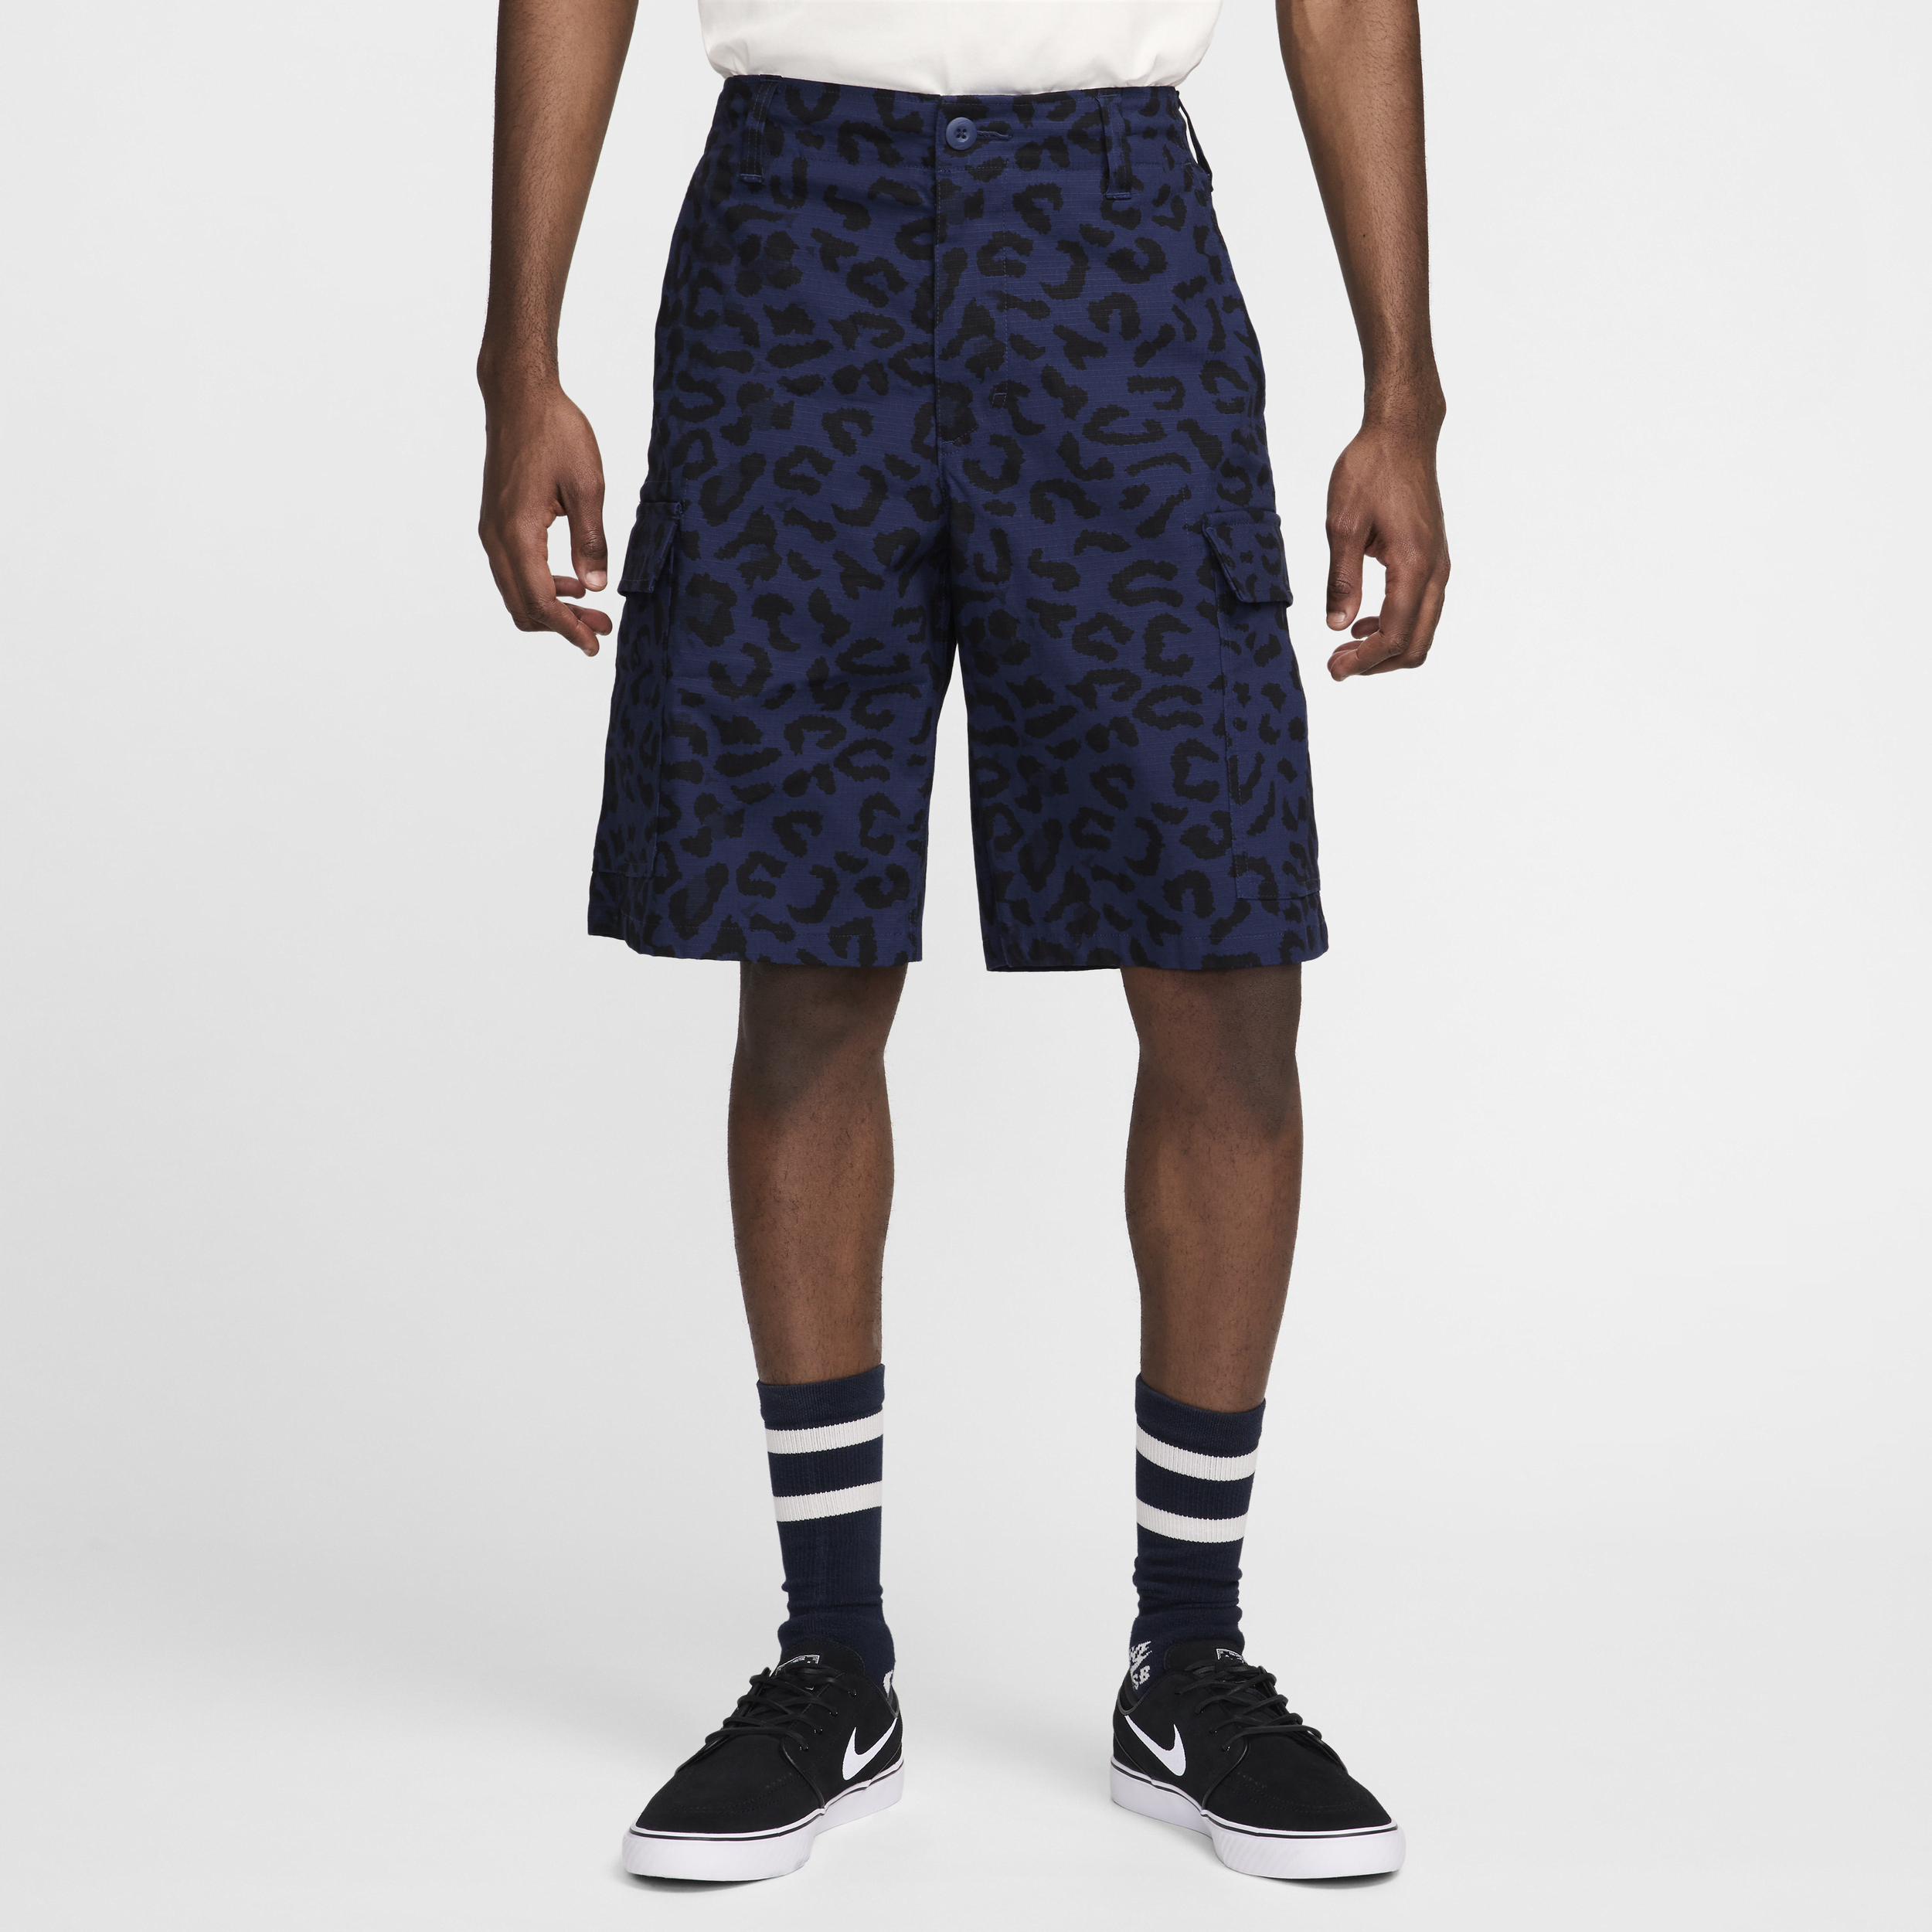 Nike SB Kearny shorts met volledige print voor heren - Blauw